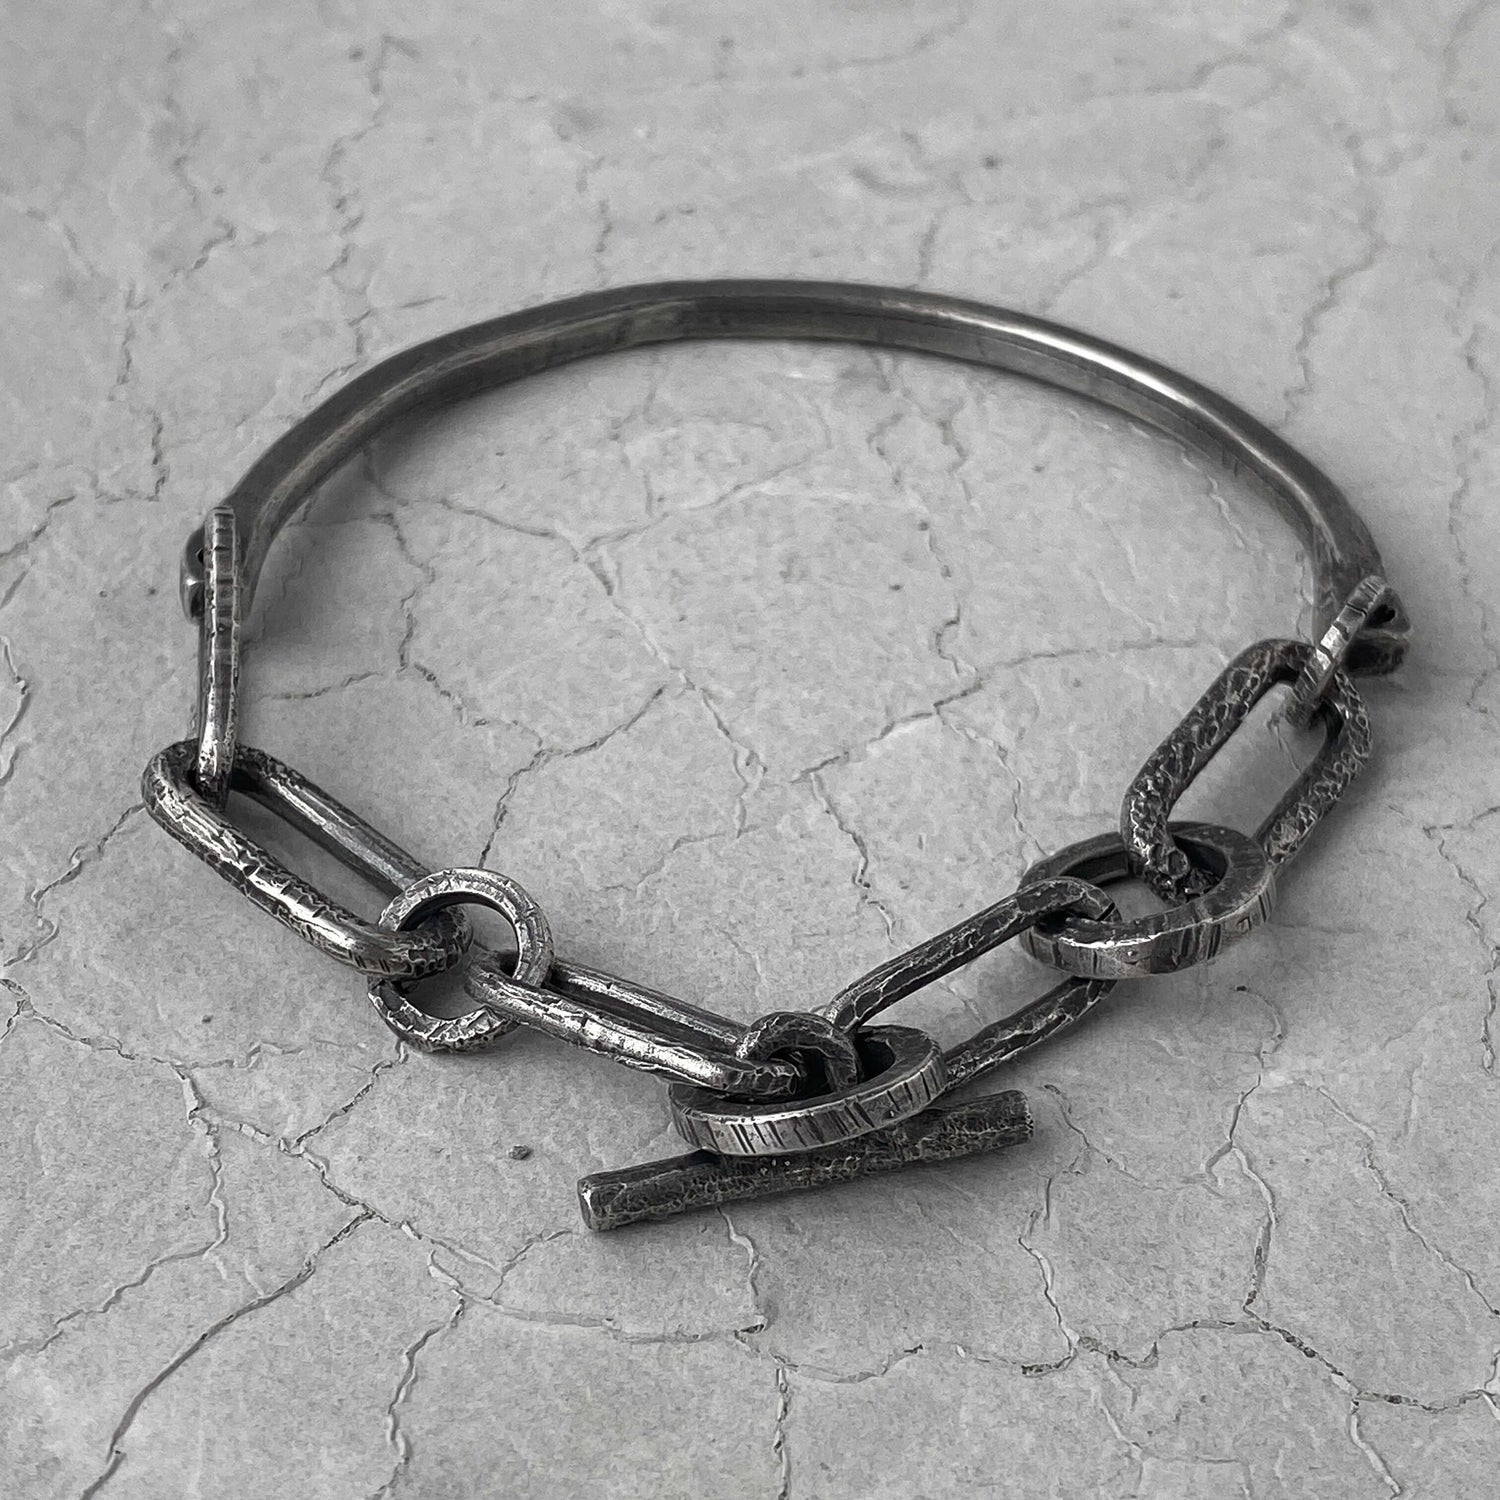 Chain bracelet-combined bracelet from different segments assembled together Bracelets Project50g 